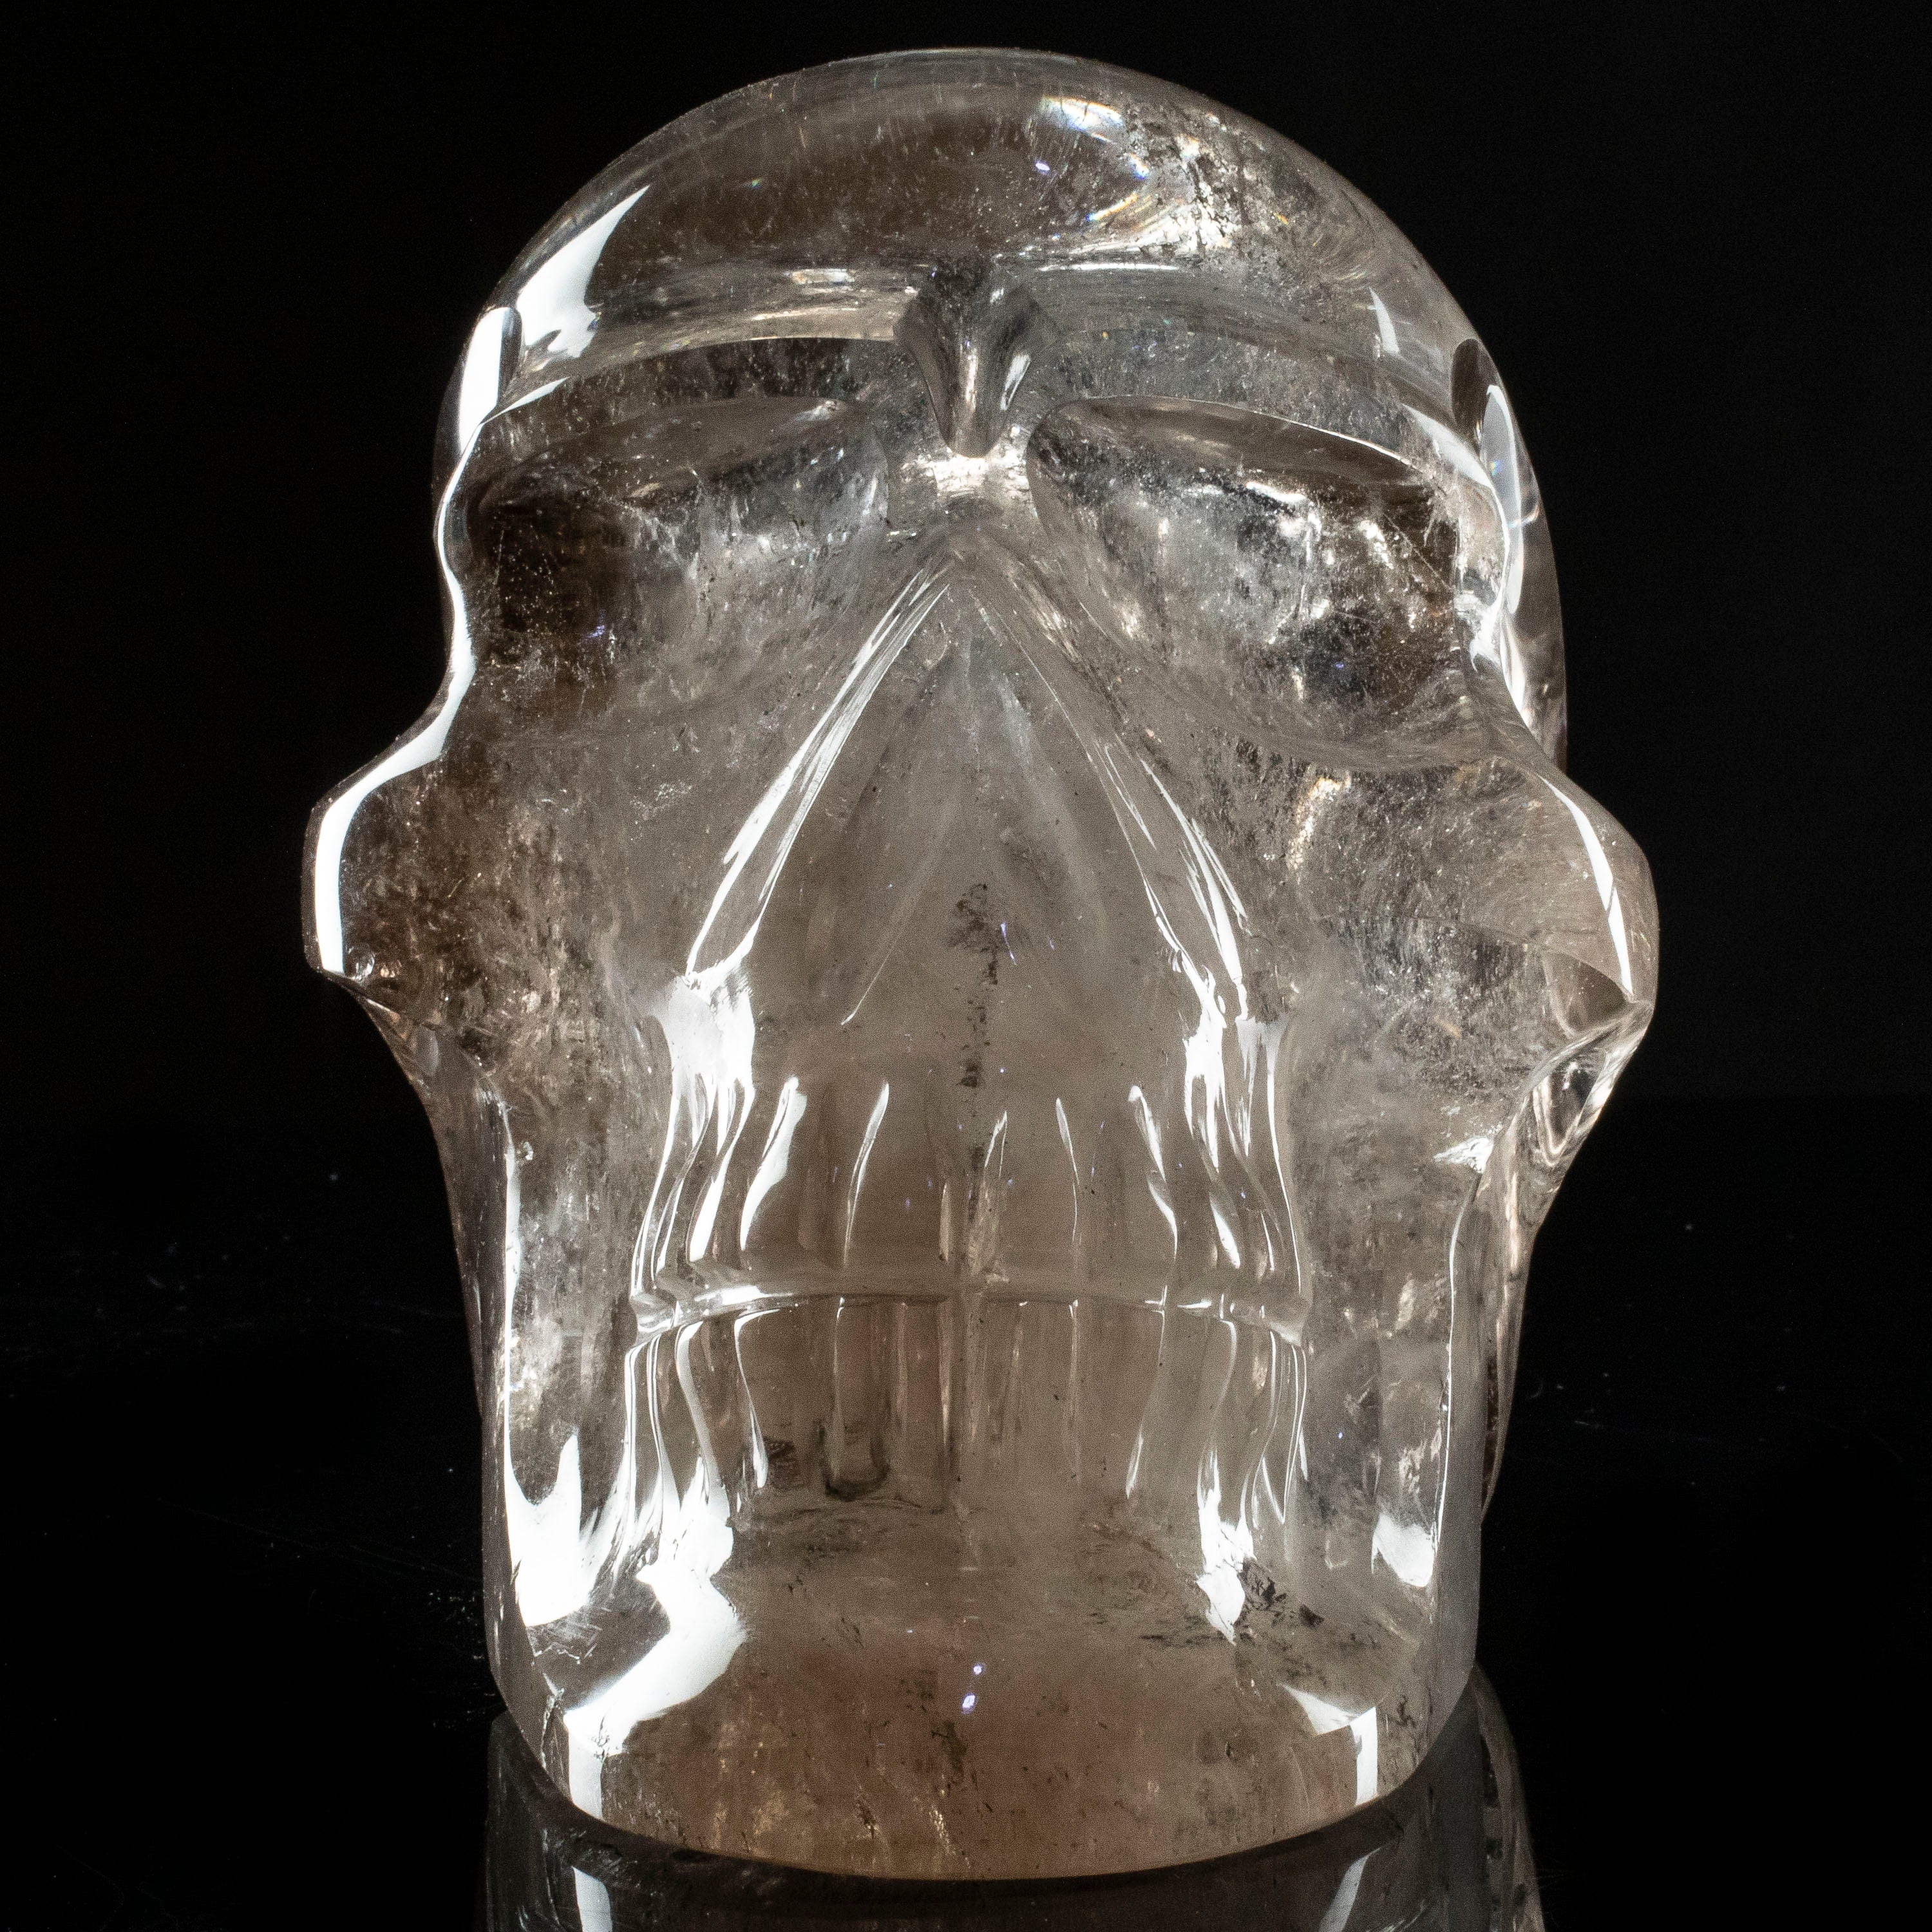 Kalifano Smoky Quartz Natural Brazilian Smoky Quartz Skull Carving - 8 in. SK12000.002